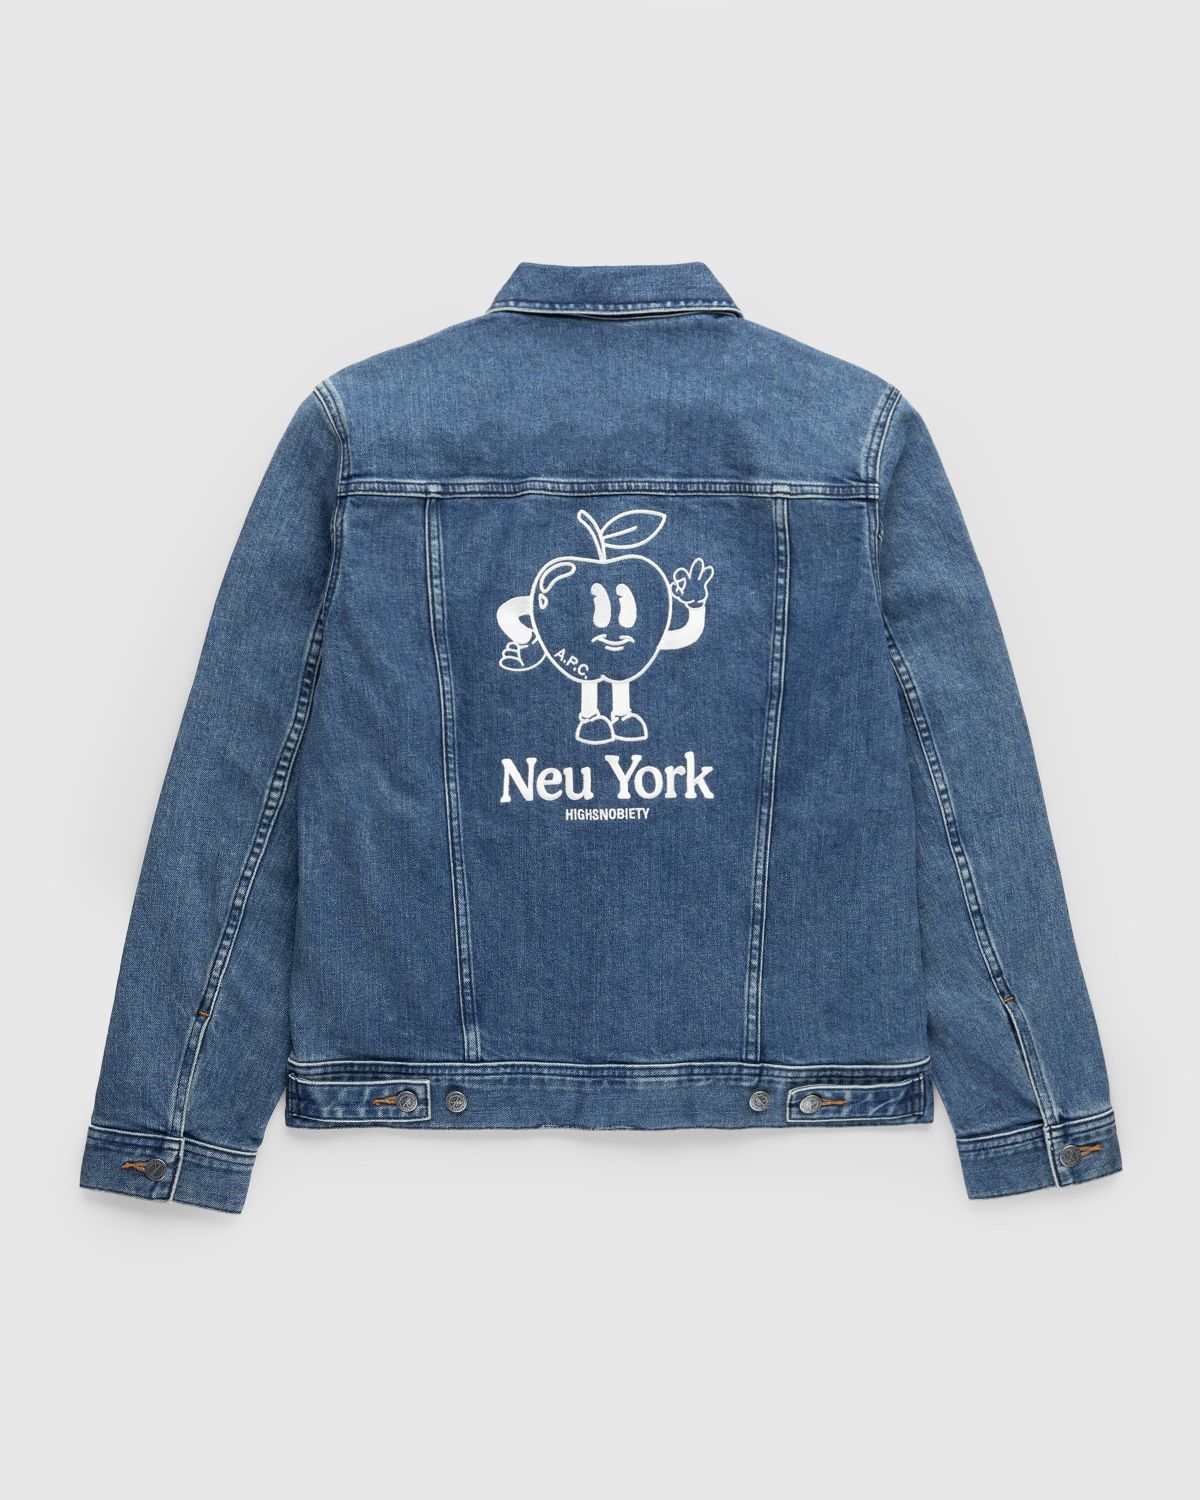 A.P.C. x Highsnobiety – Neu York Jean Jacket Blue - Outerwear - Blue - Image 1